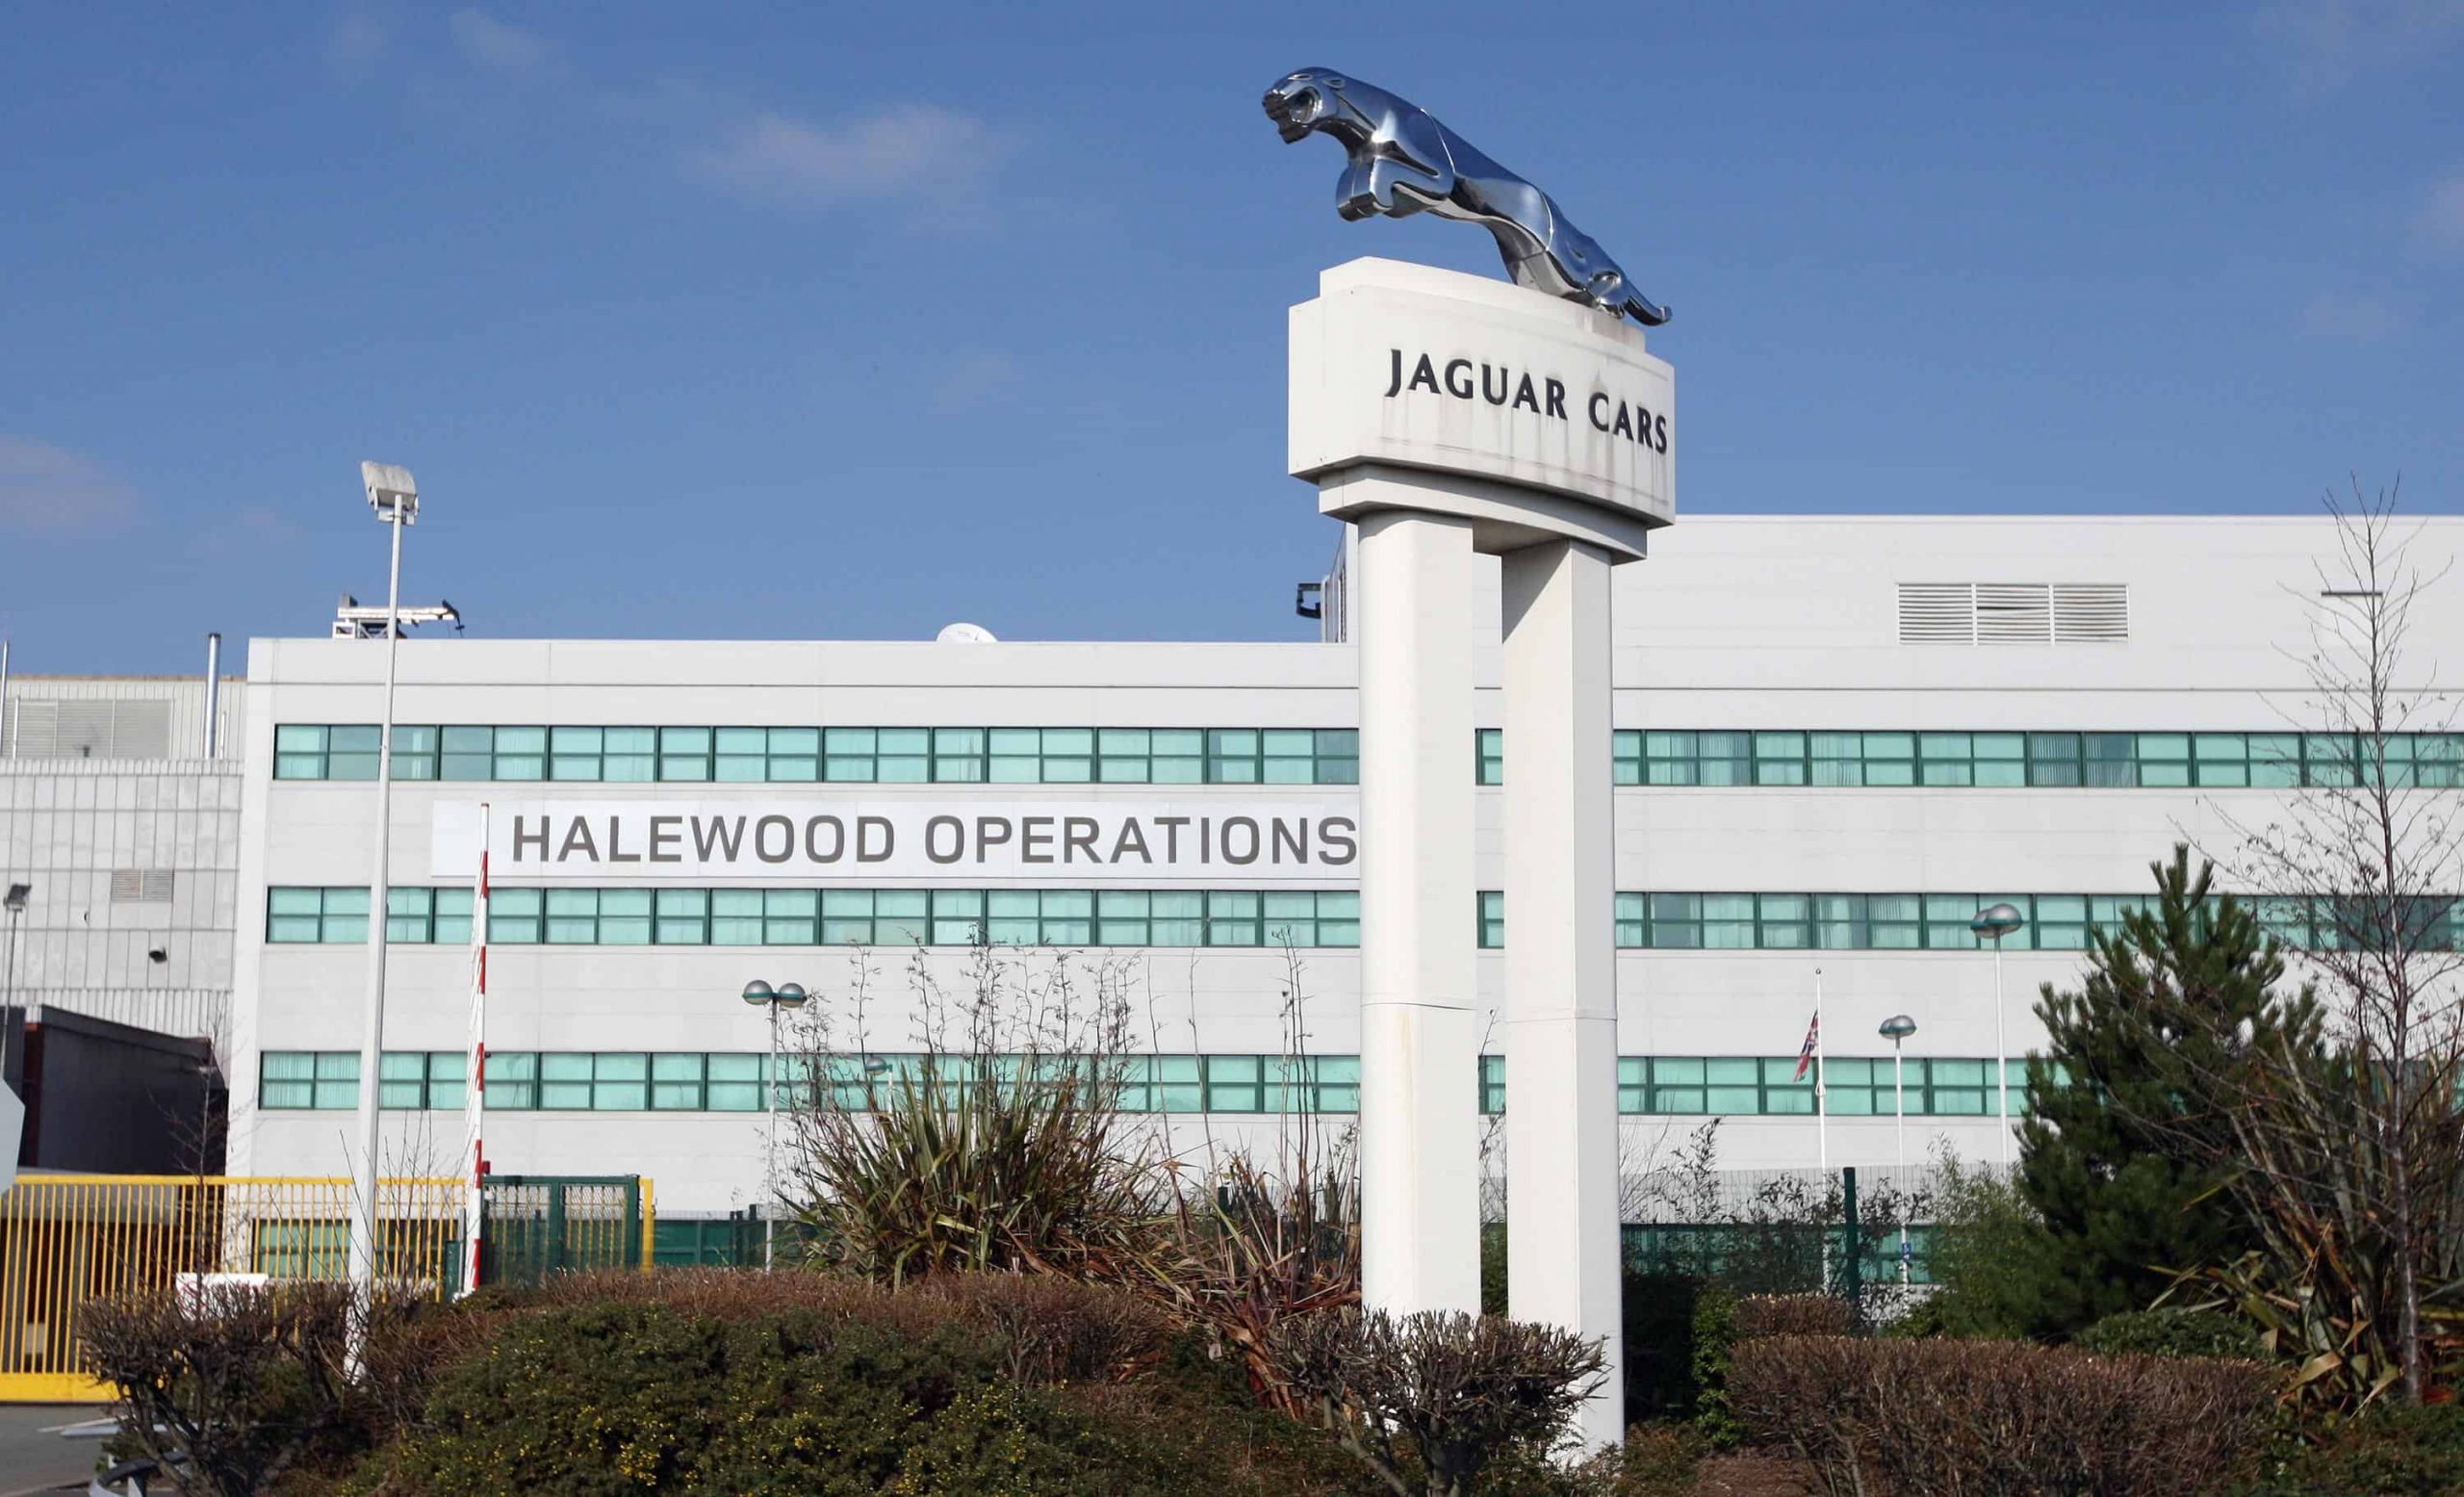 JLR ‘cutting hundreds of jobs’ at UK car plant